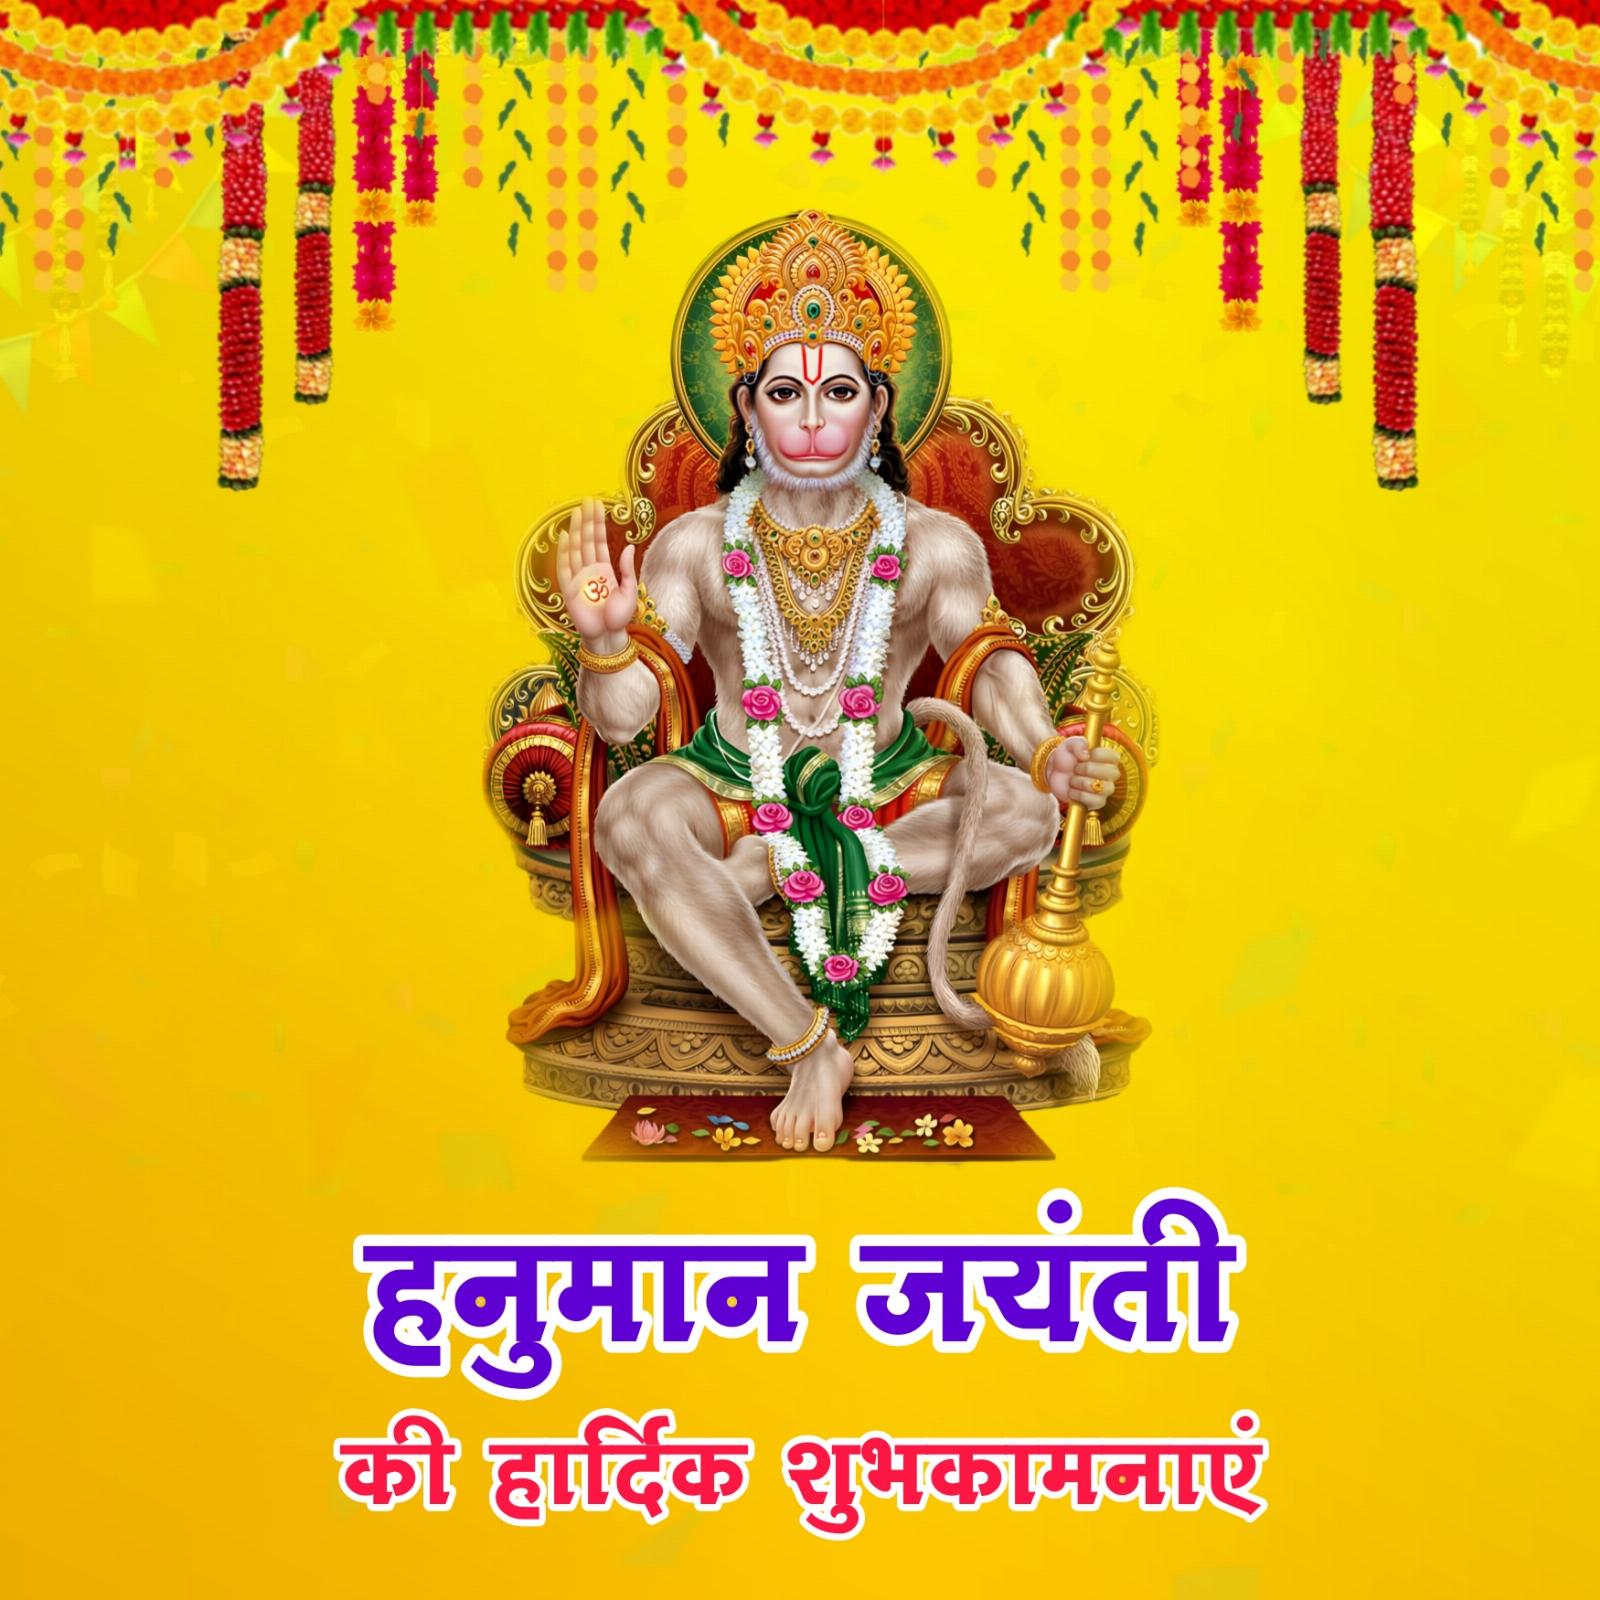 Happy Hanuman Jayanti Images in Marathi